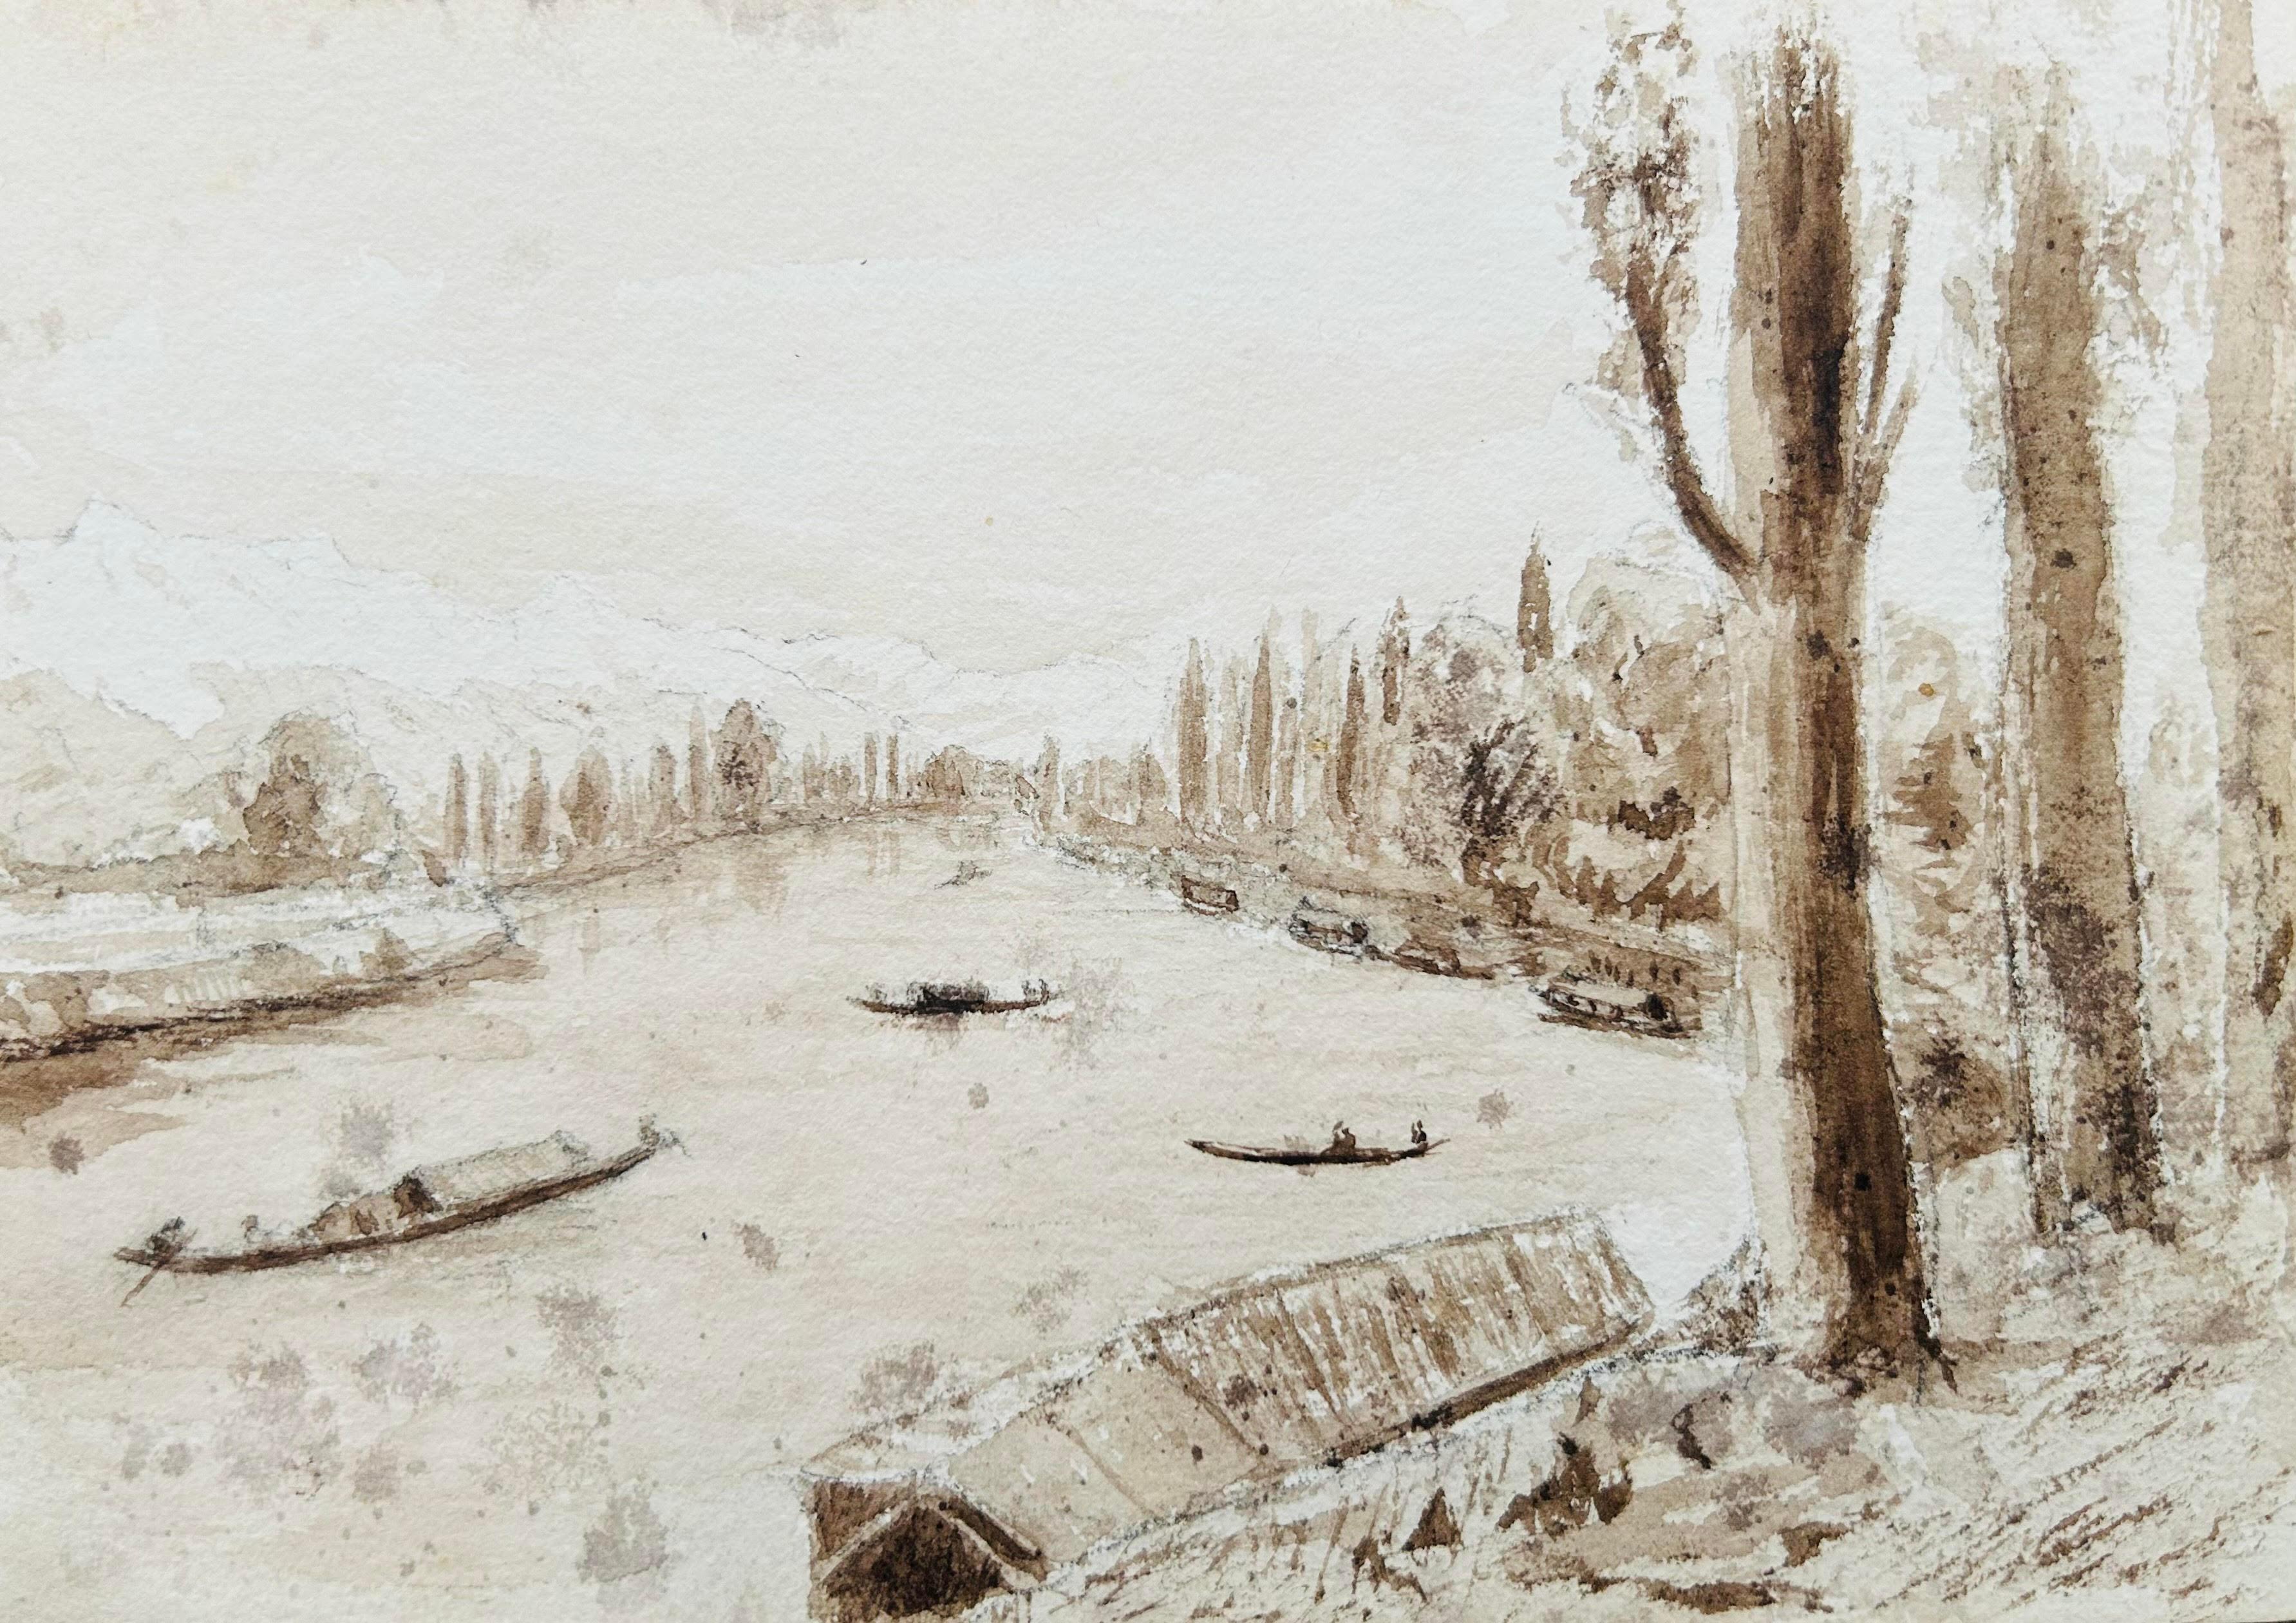 India 3 X 19. Jahrhundert Kaschmir NW Frontier Field Sketches Manasbal Lake, Kashmir